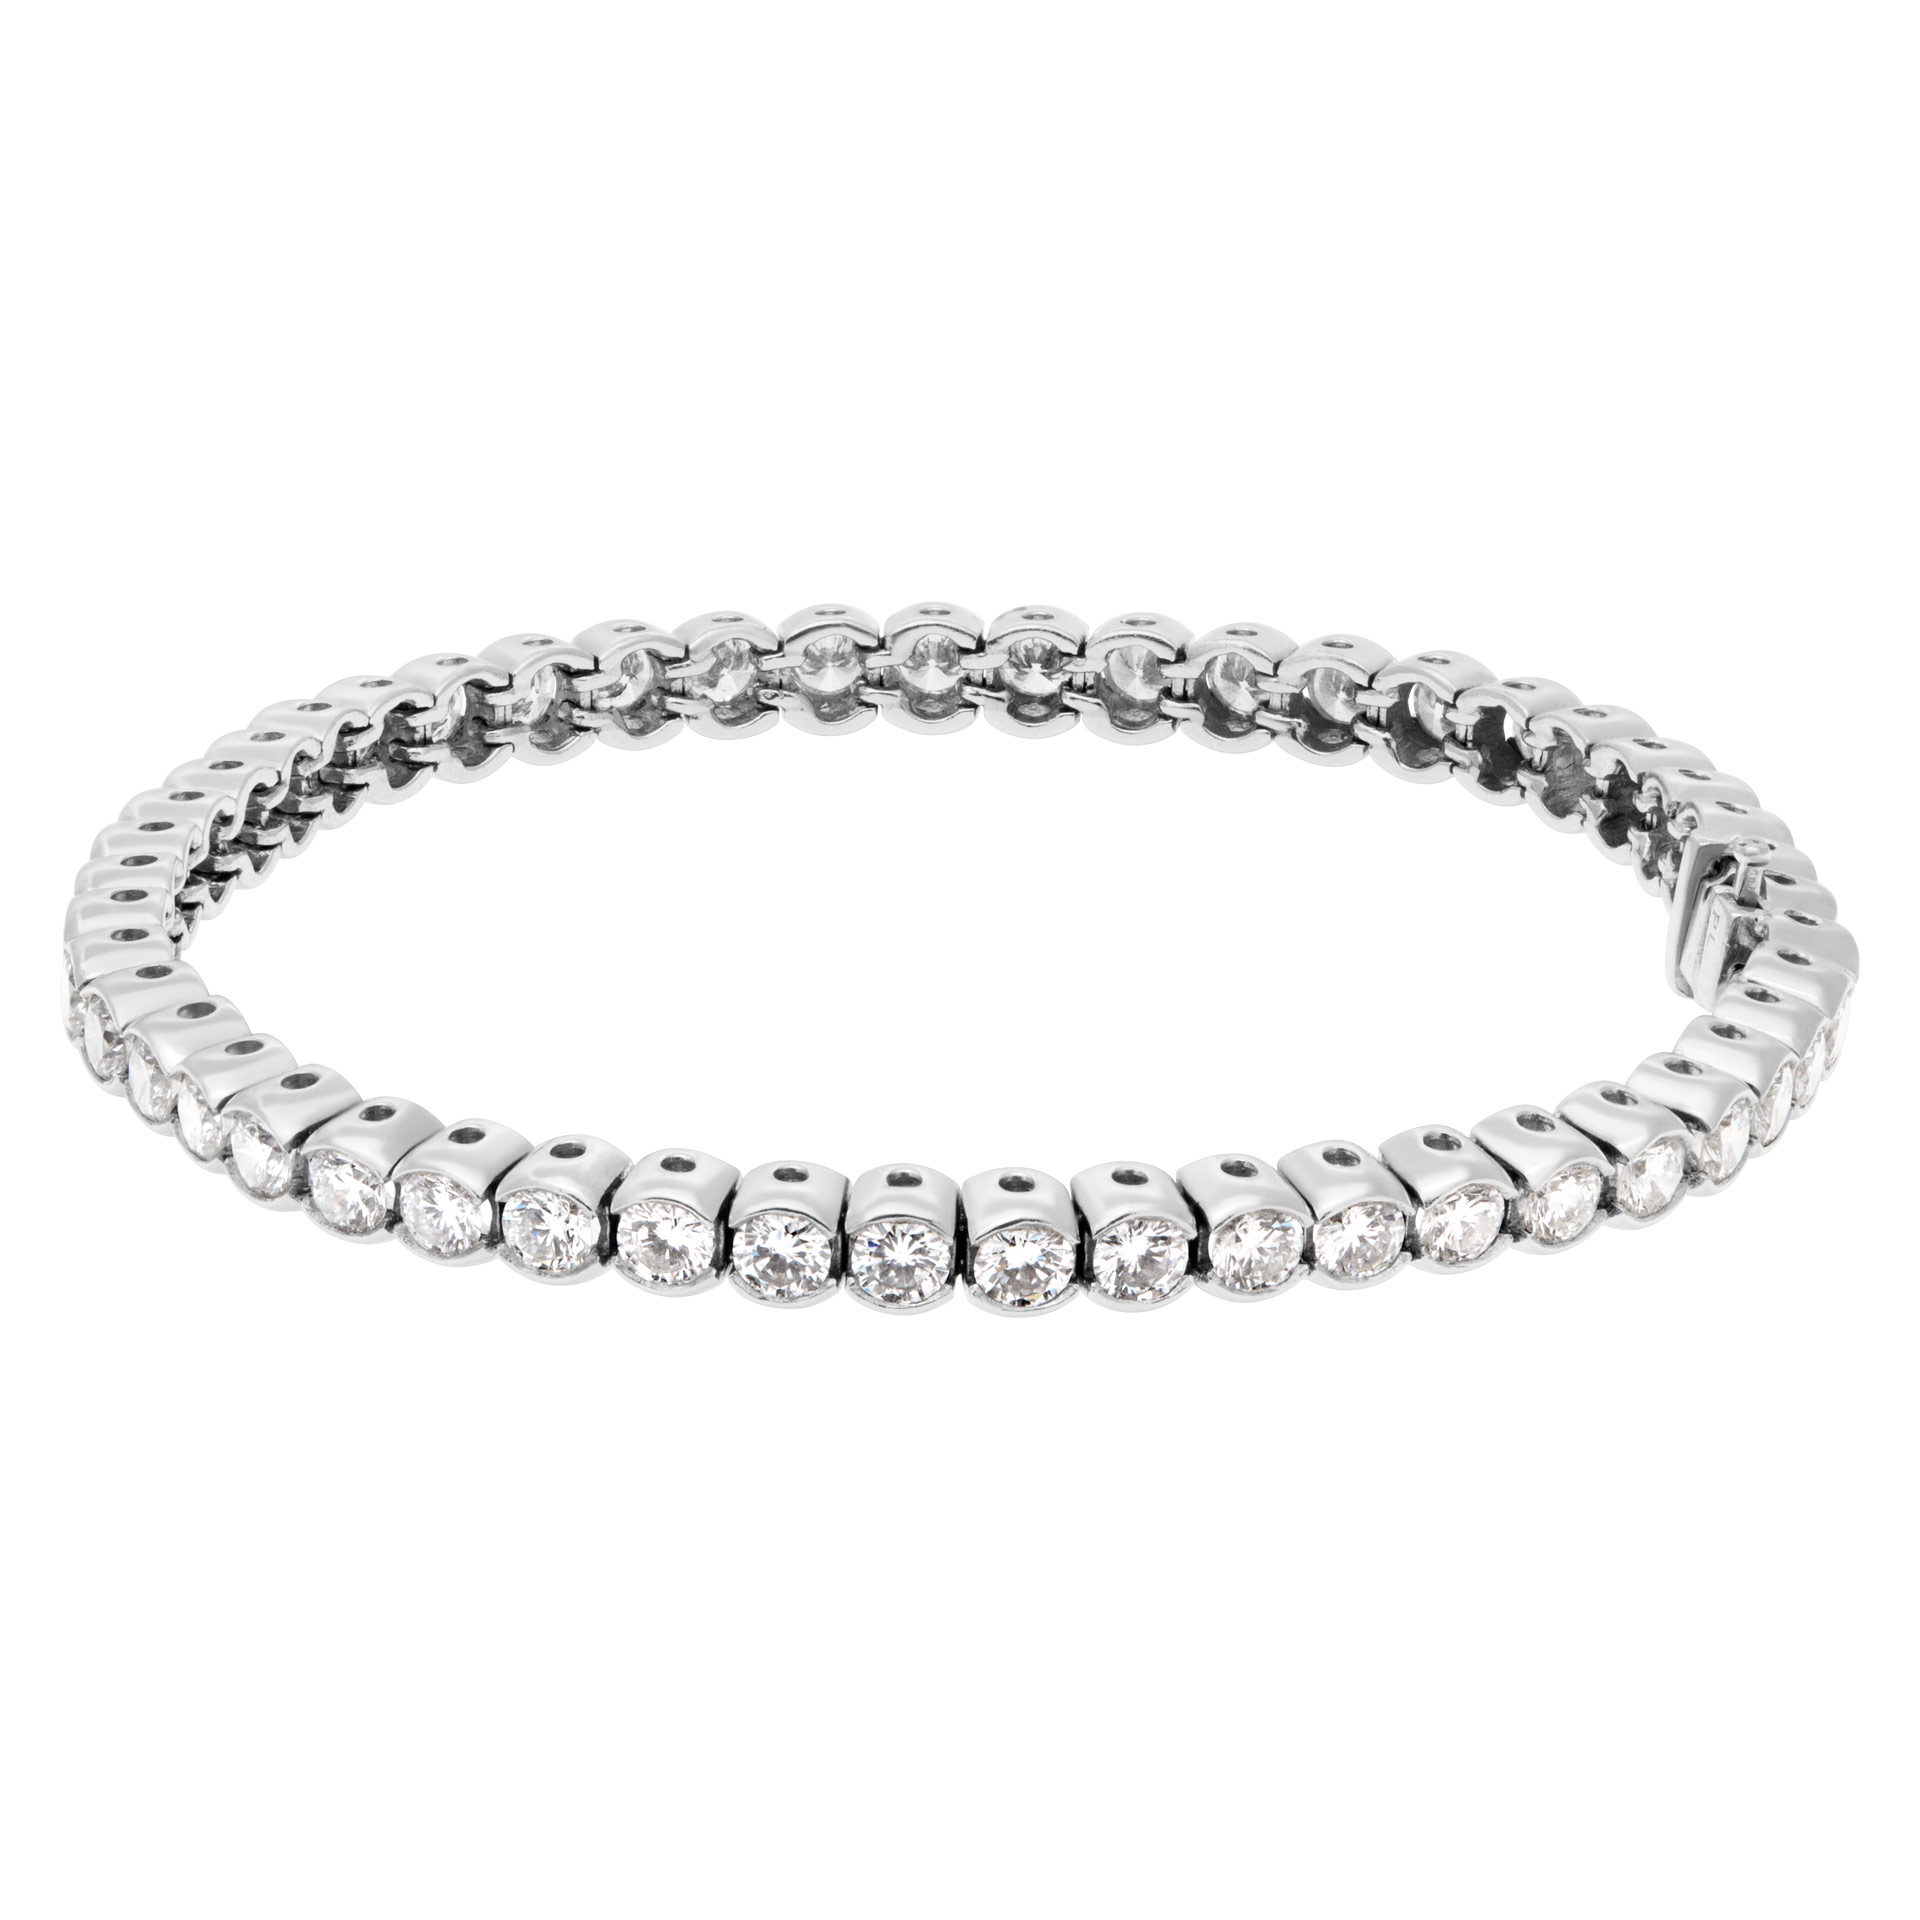 Platinum diamond line bracelet with approx. 7.35 carats (G color, VS1 clarity) image 1